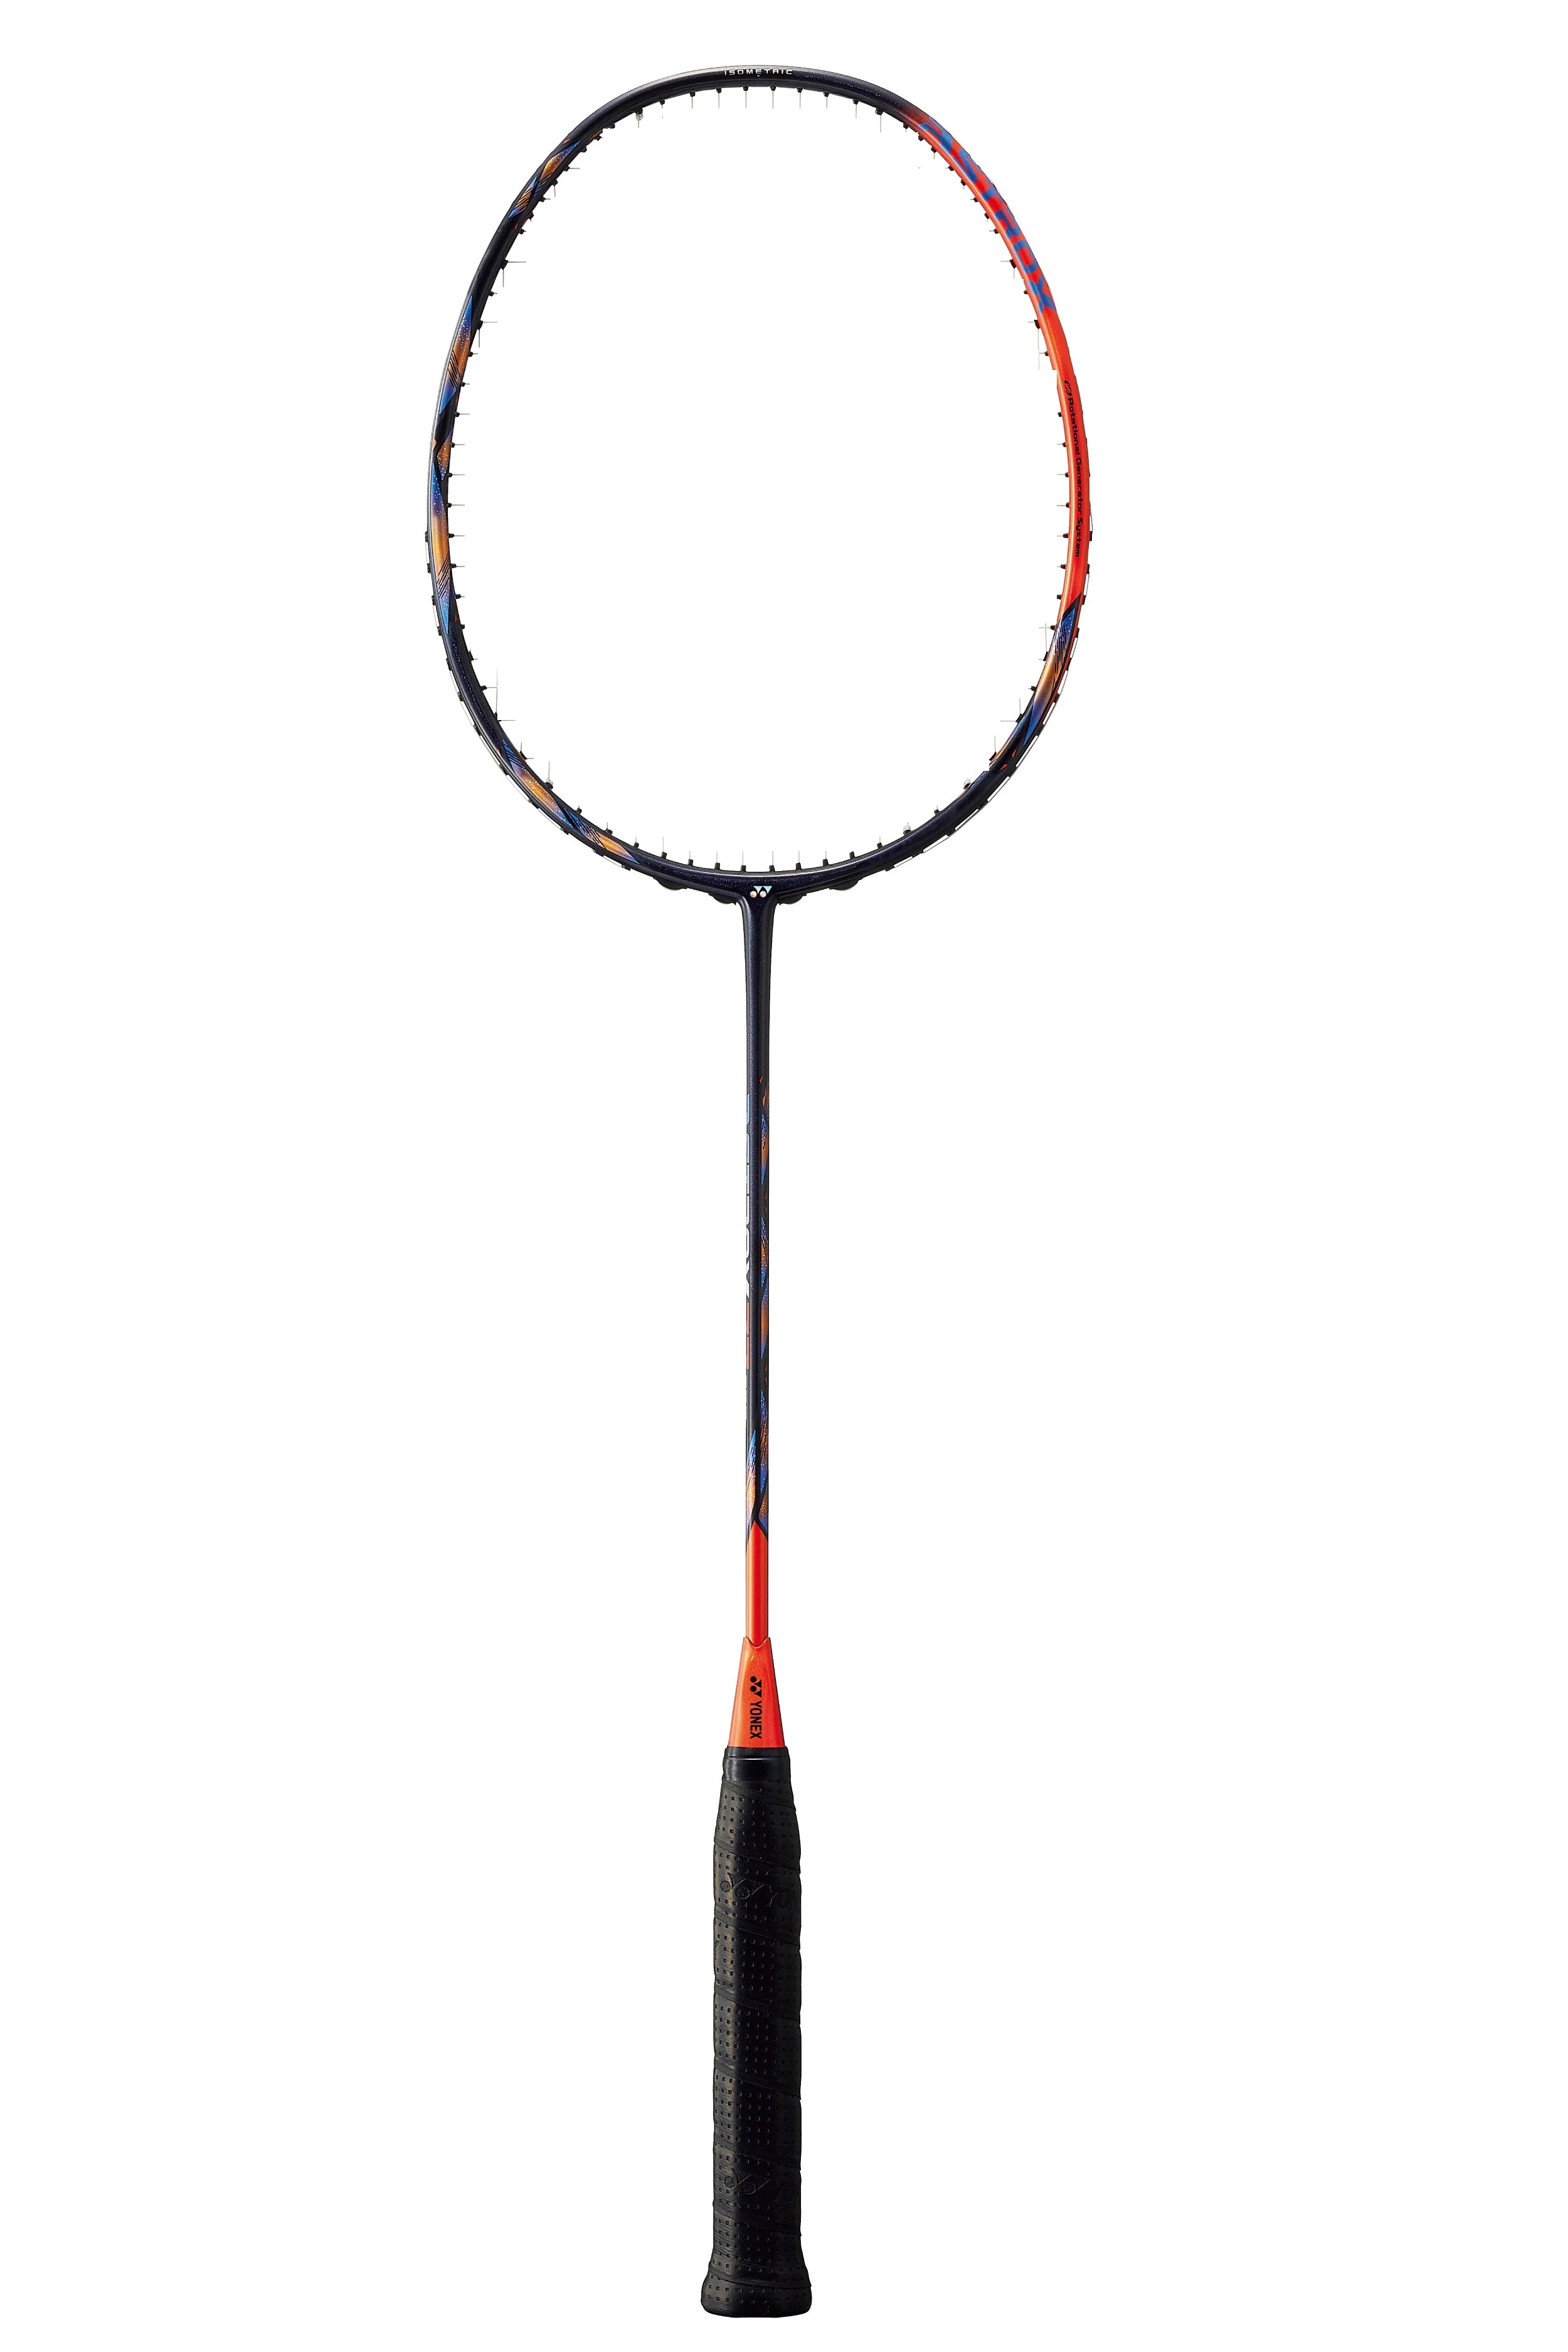 YONEX Astrox 77 PRO Badminton Racquet - High Orange - Unstrung Made in Japan